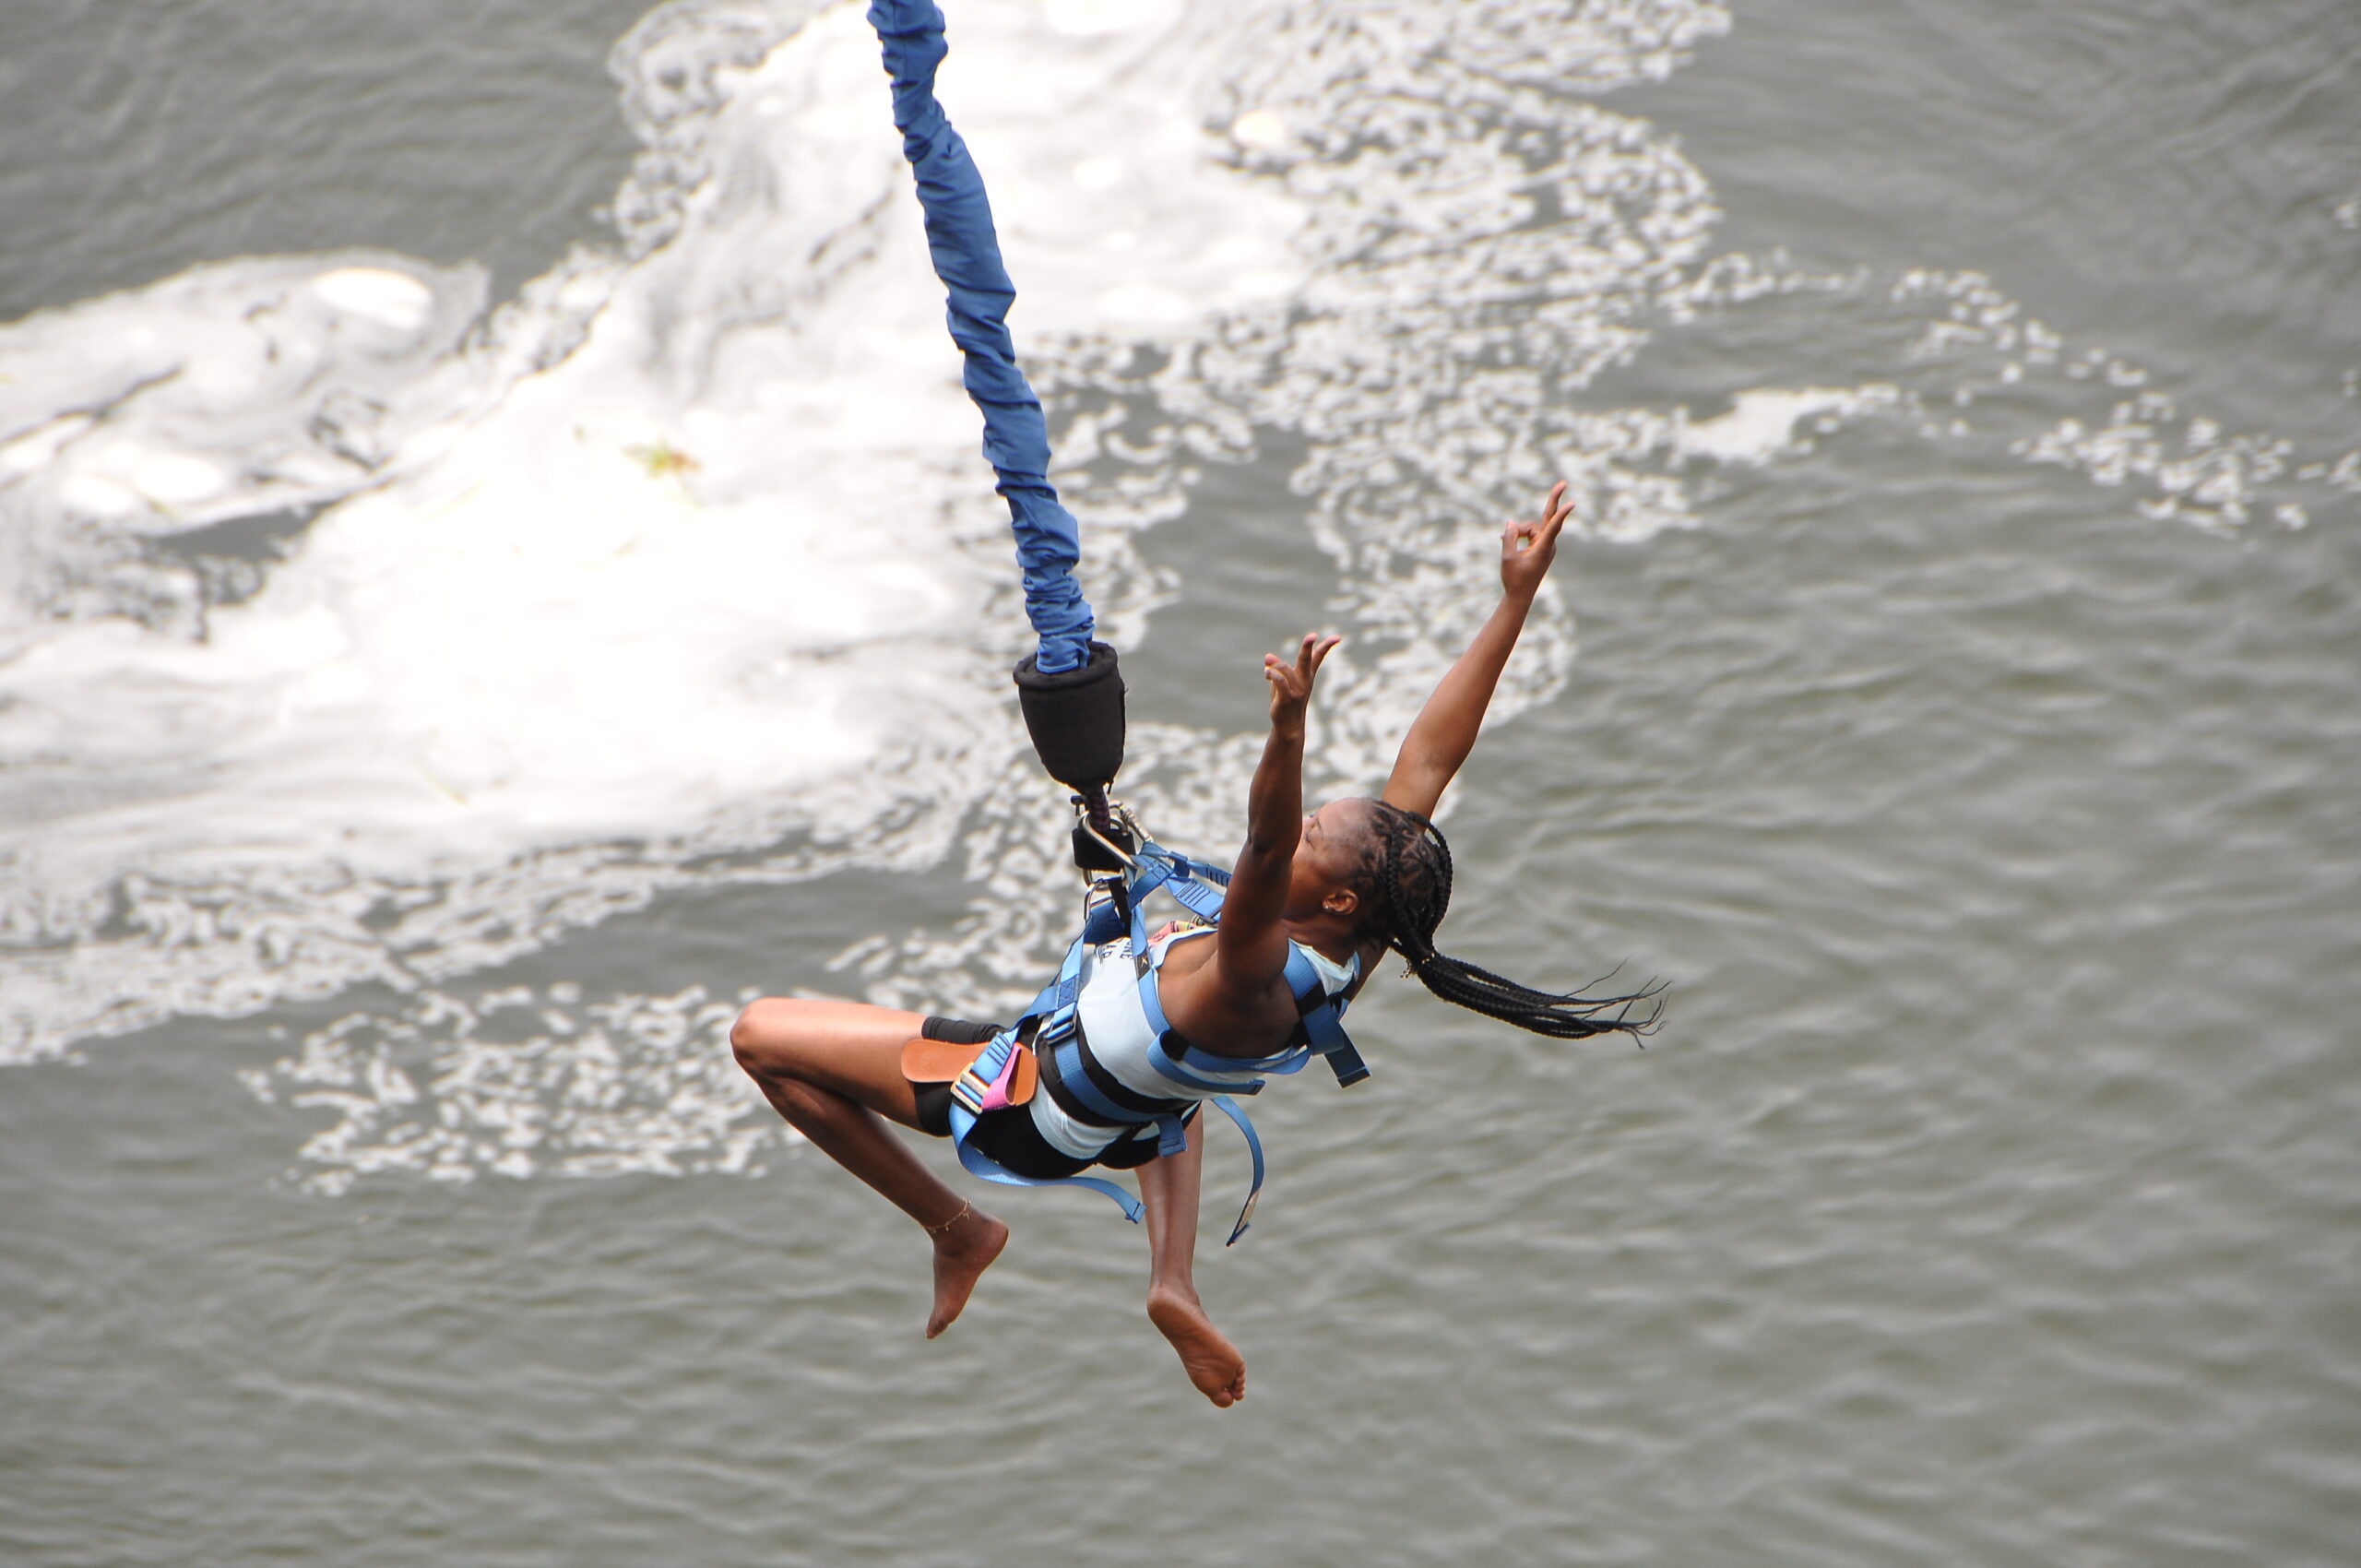 bungee jumping at source of the Nile river/4x4 Uganda car rentals